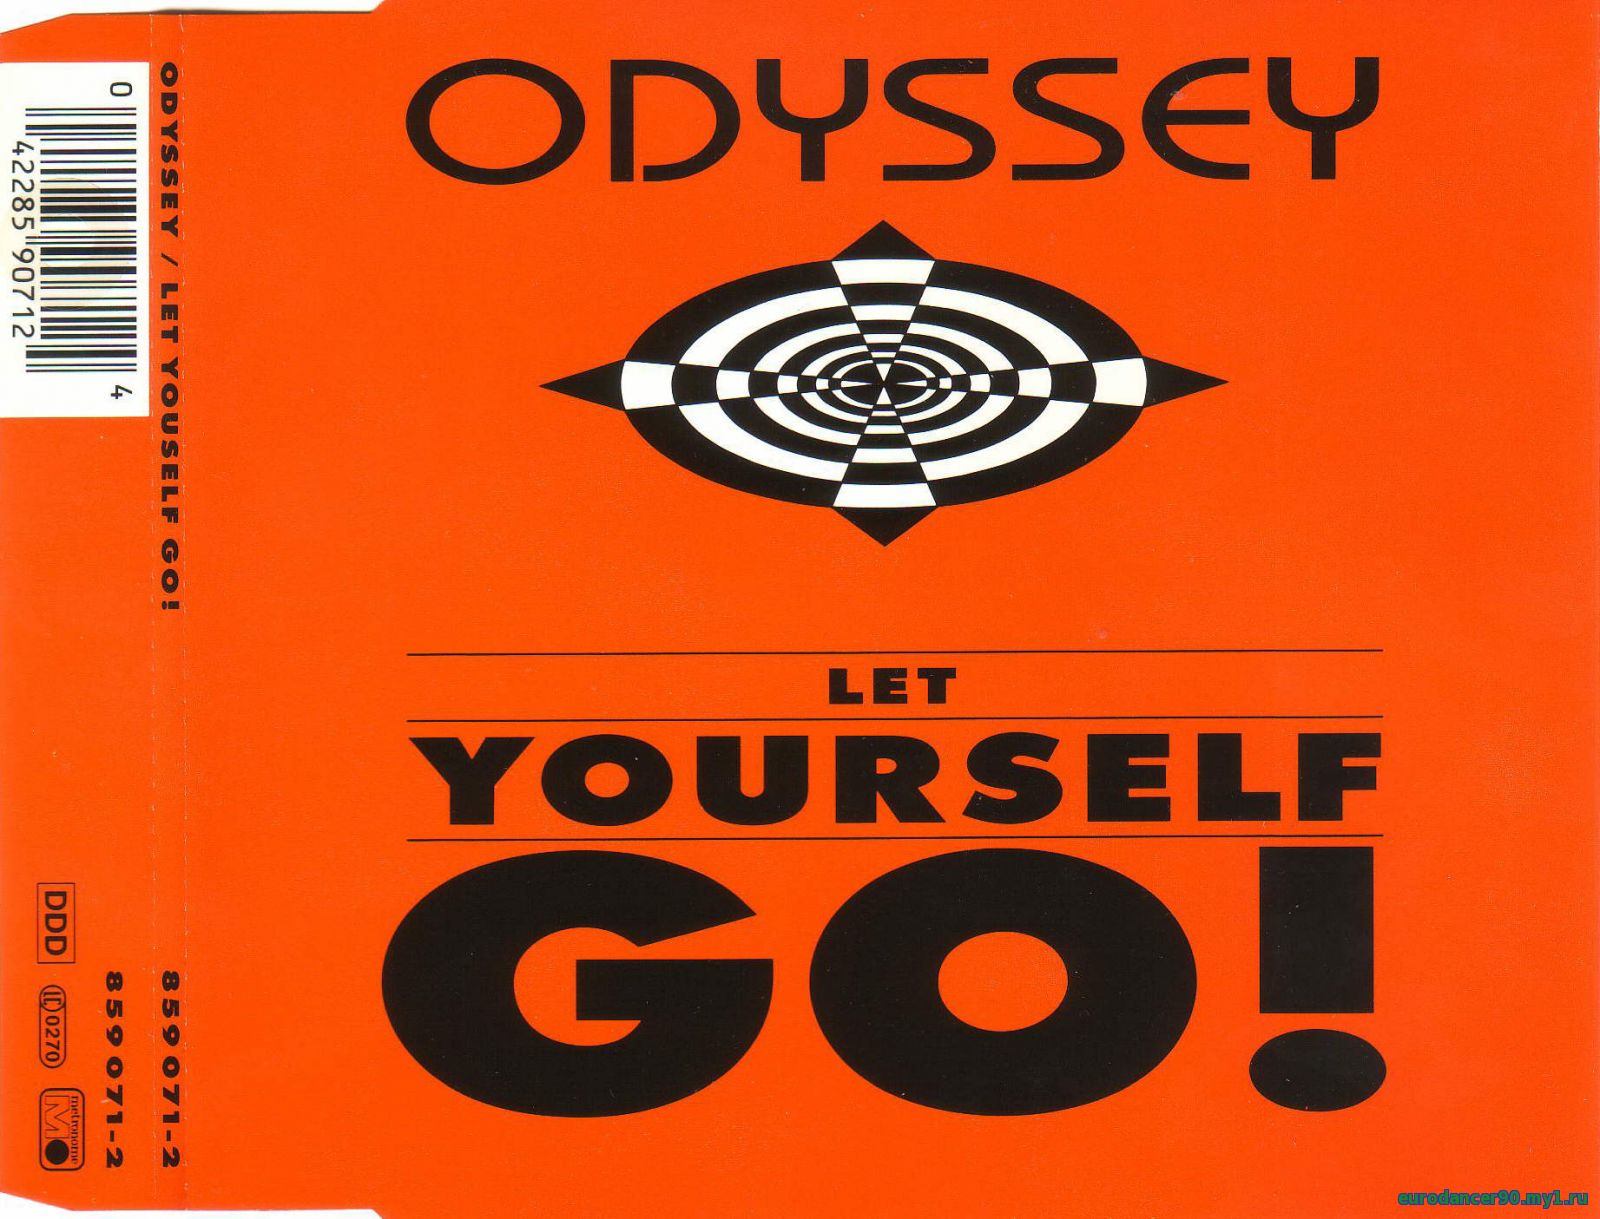 Odyssey Eurodance 90. Odyssey Eurodance группа. Scooter кассеты. Dr. Alban - Let the Beat go on.